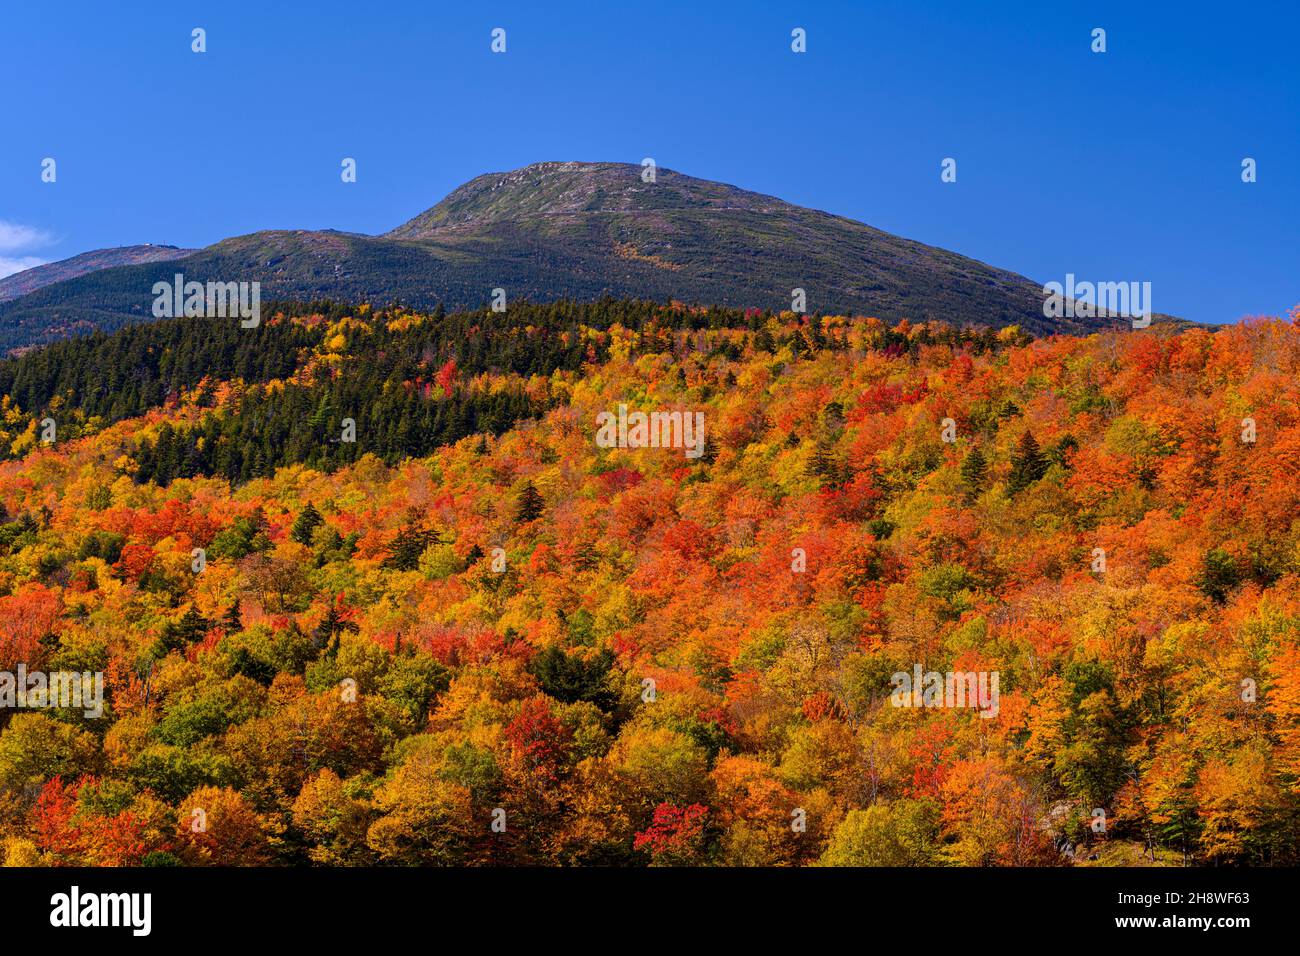 Autumn foliage in the deciduous forest on New England hillsides, Mount Washington, Pinkham Notch, New Hampshire, USA Stock Photo